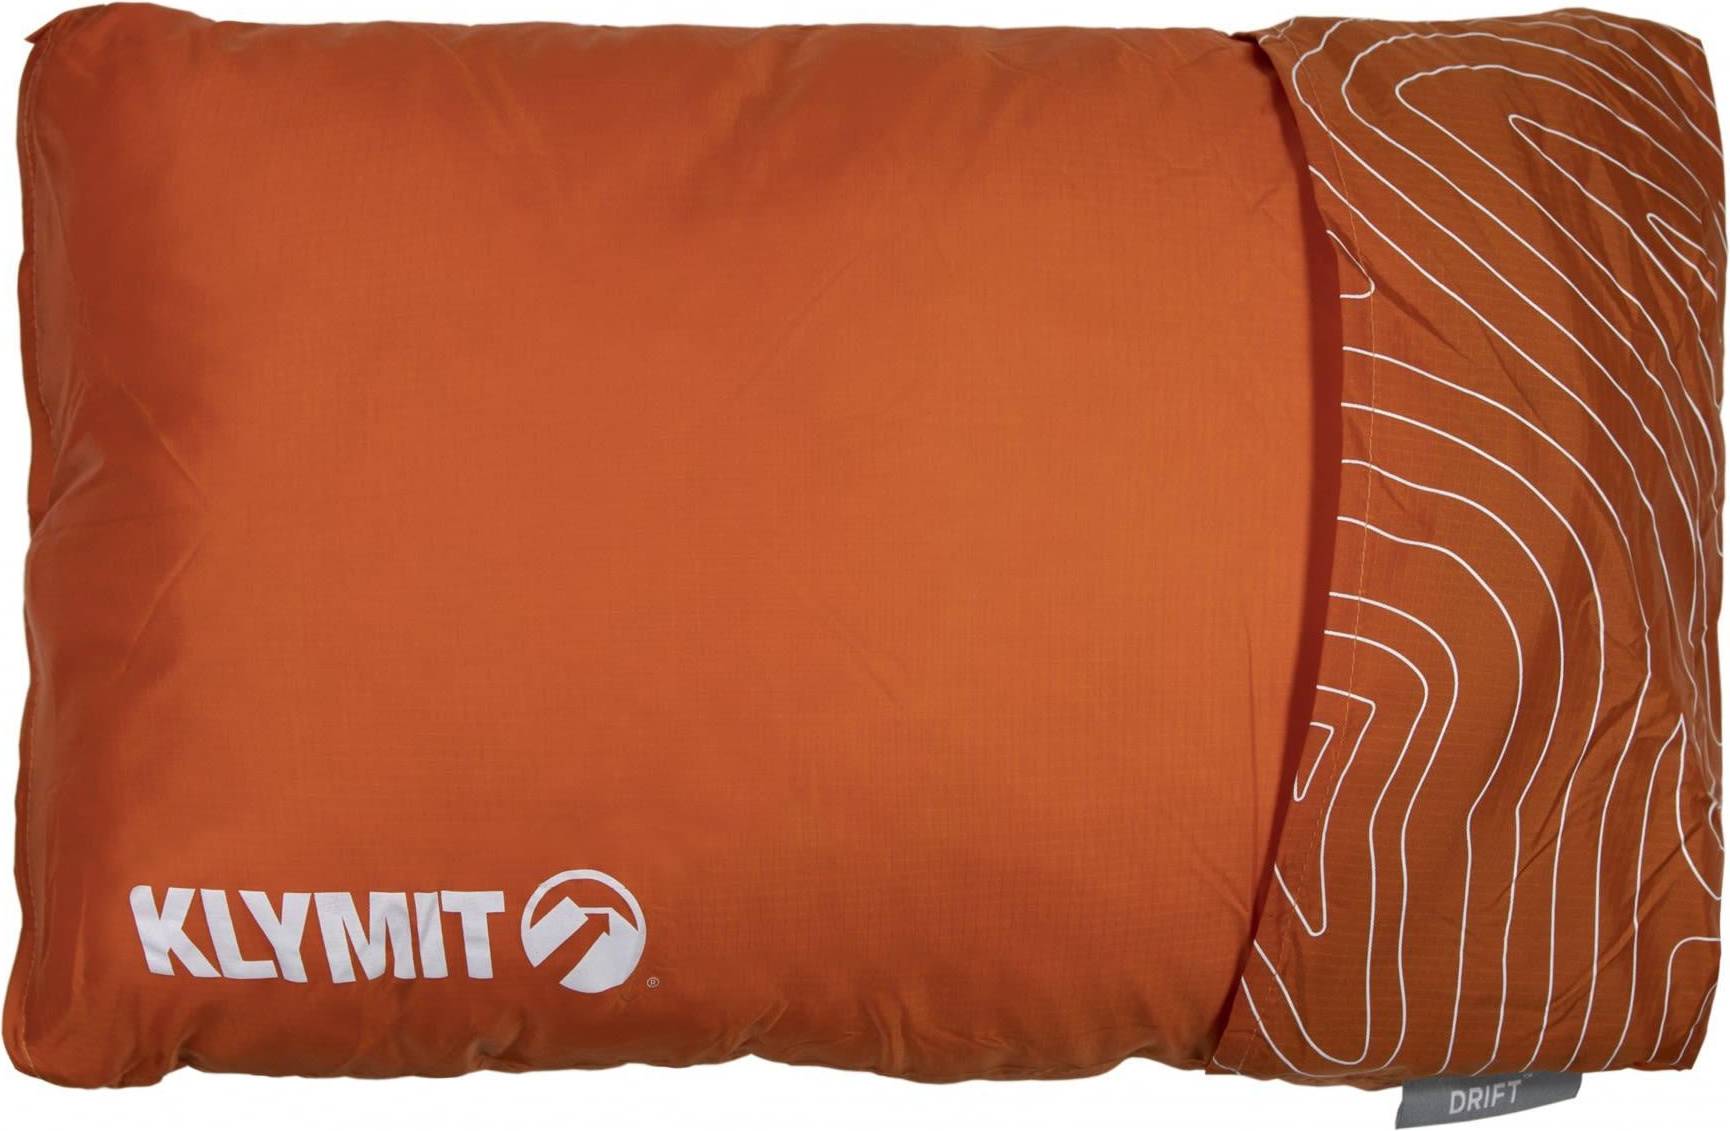  Bild på Klymit Drift Car Camp Pillow Large orange 2021 Cussions liggunderlag